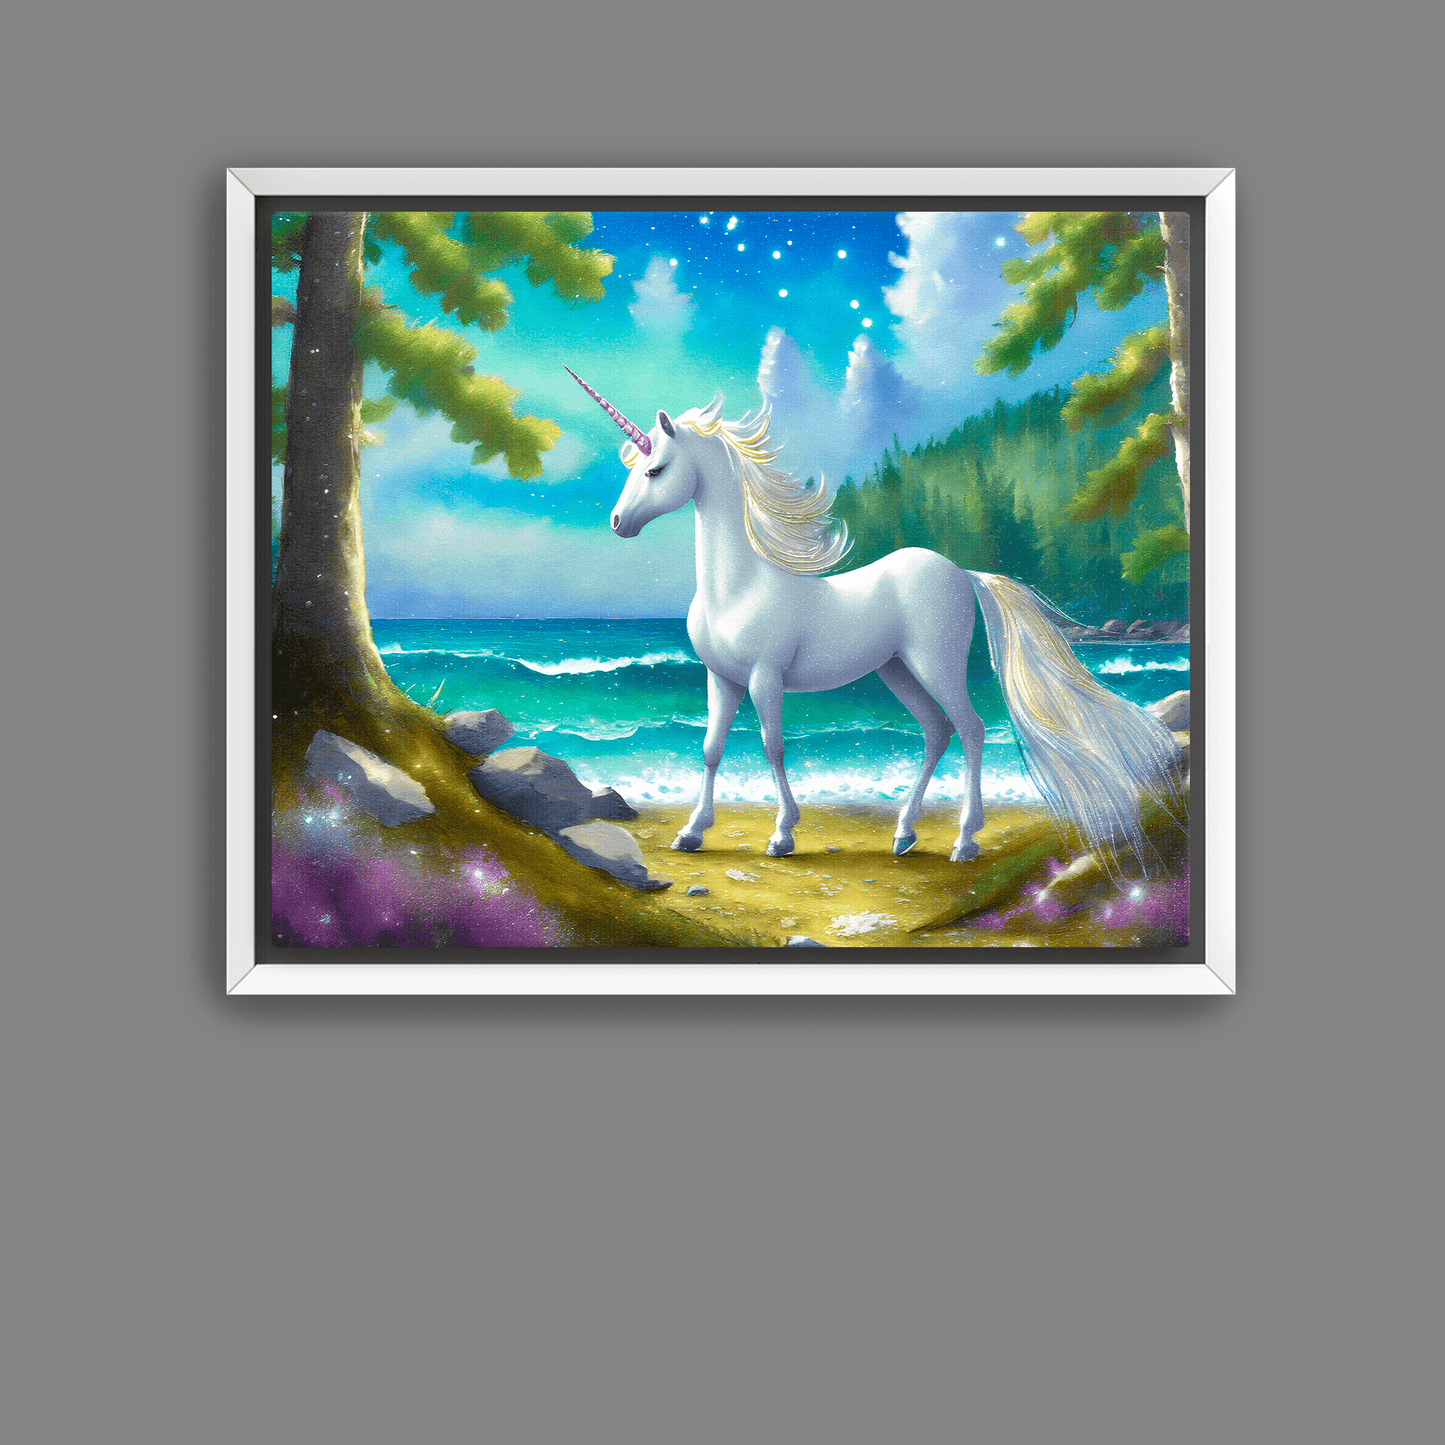 Unicorn By the Sea - Canvas Wrap - Premium Canvas Wrap